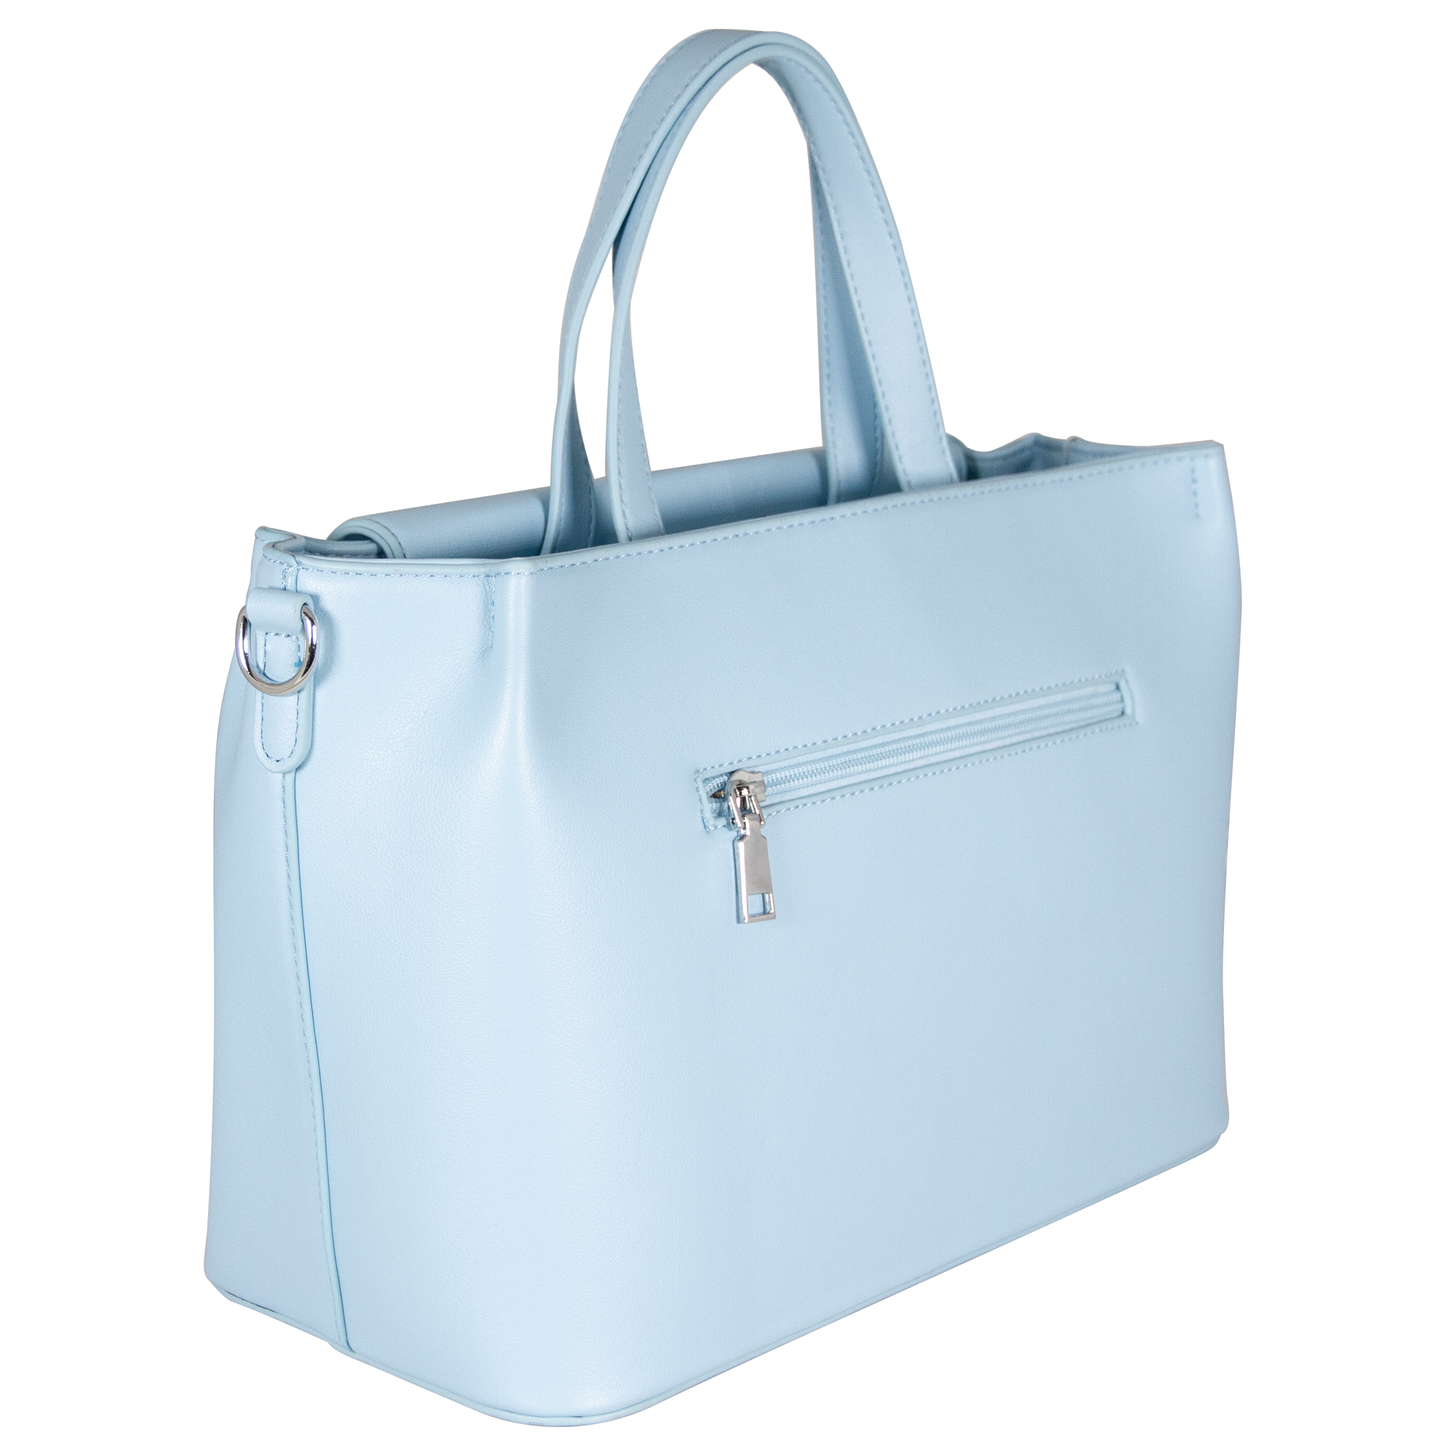 Z5B2 Women’s Charm Handbag - Blue